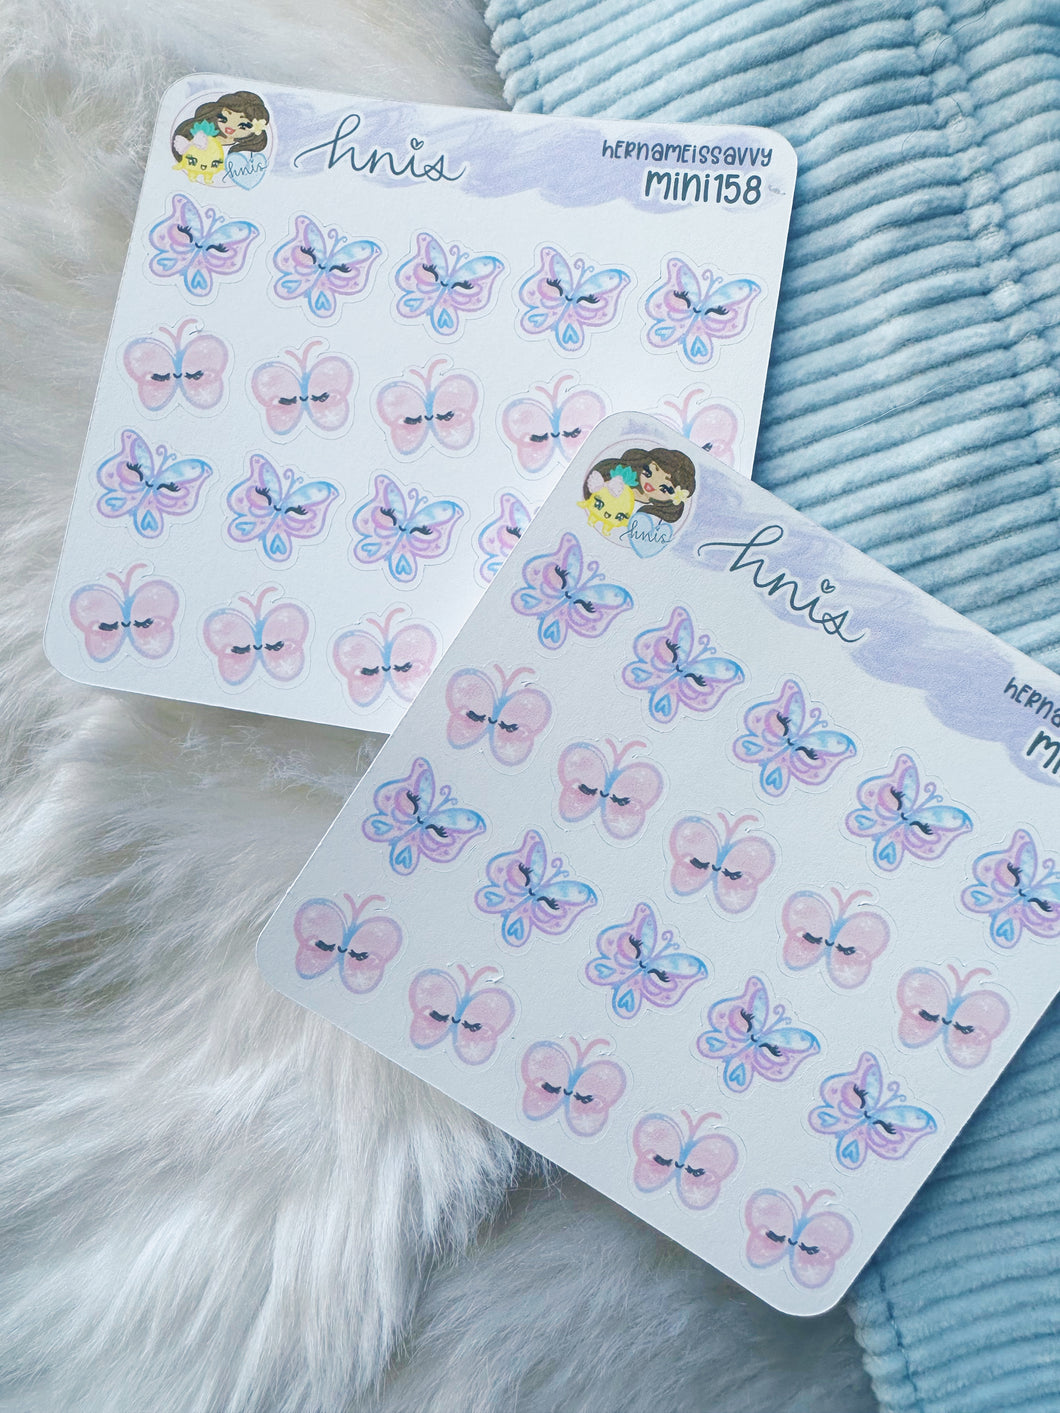 MINI158 - Candy Clouds Butterfly Sticker Sheet